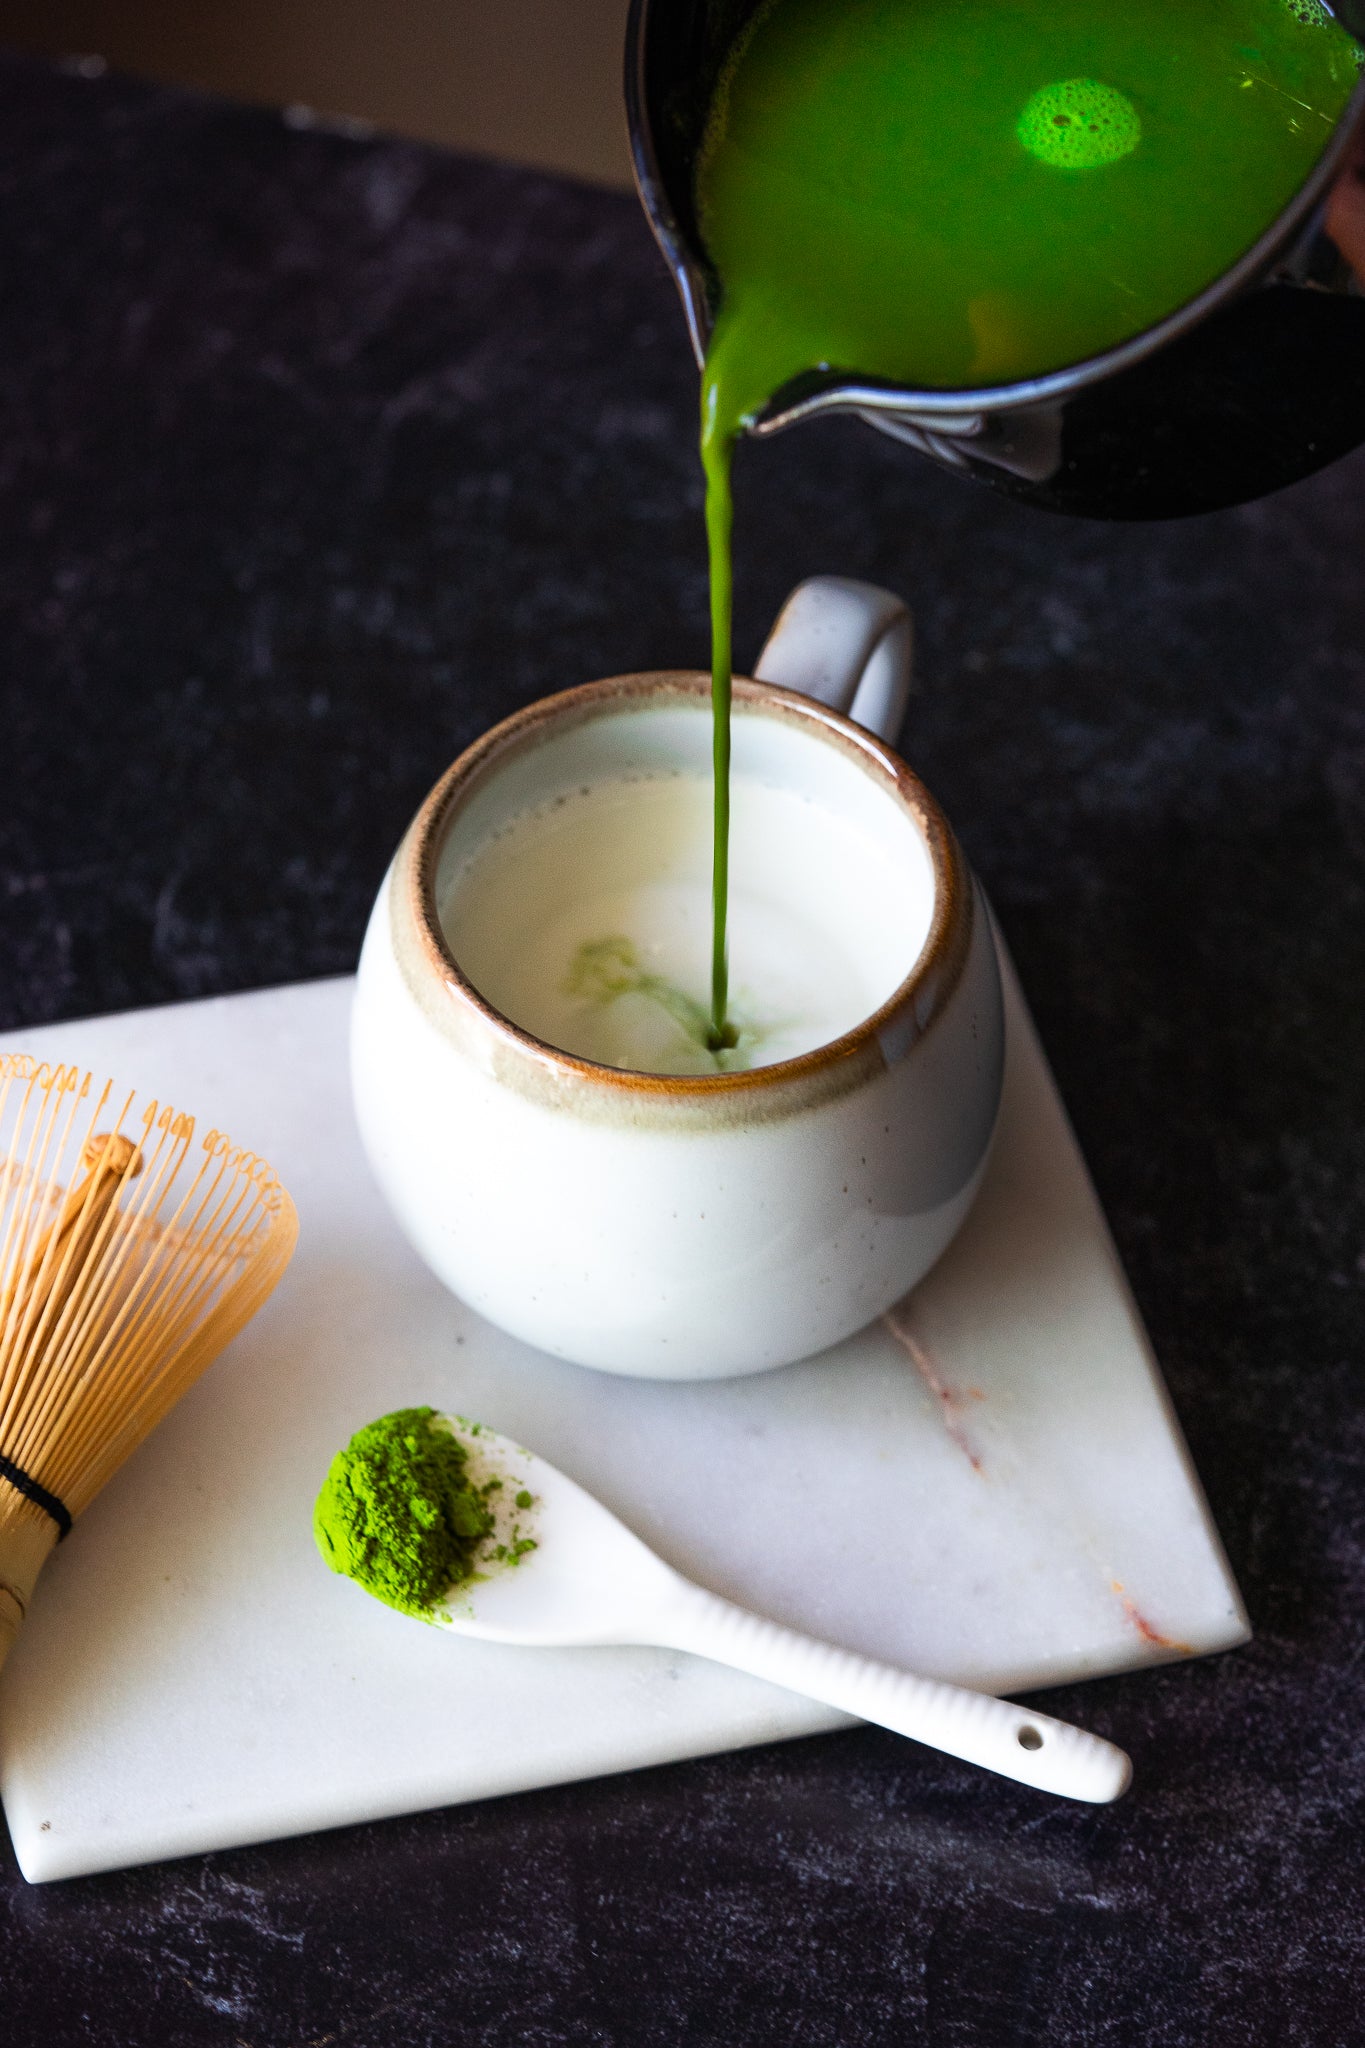 Matcha green tea being poured into a mug